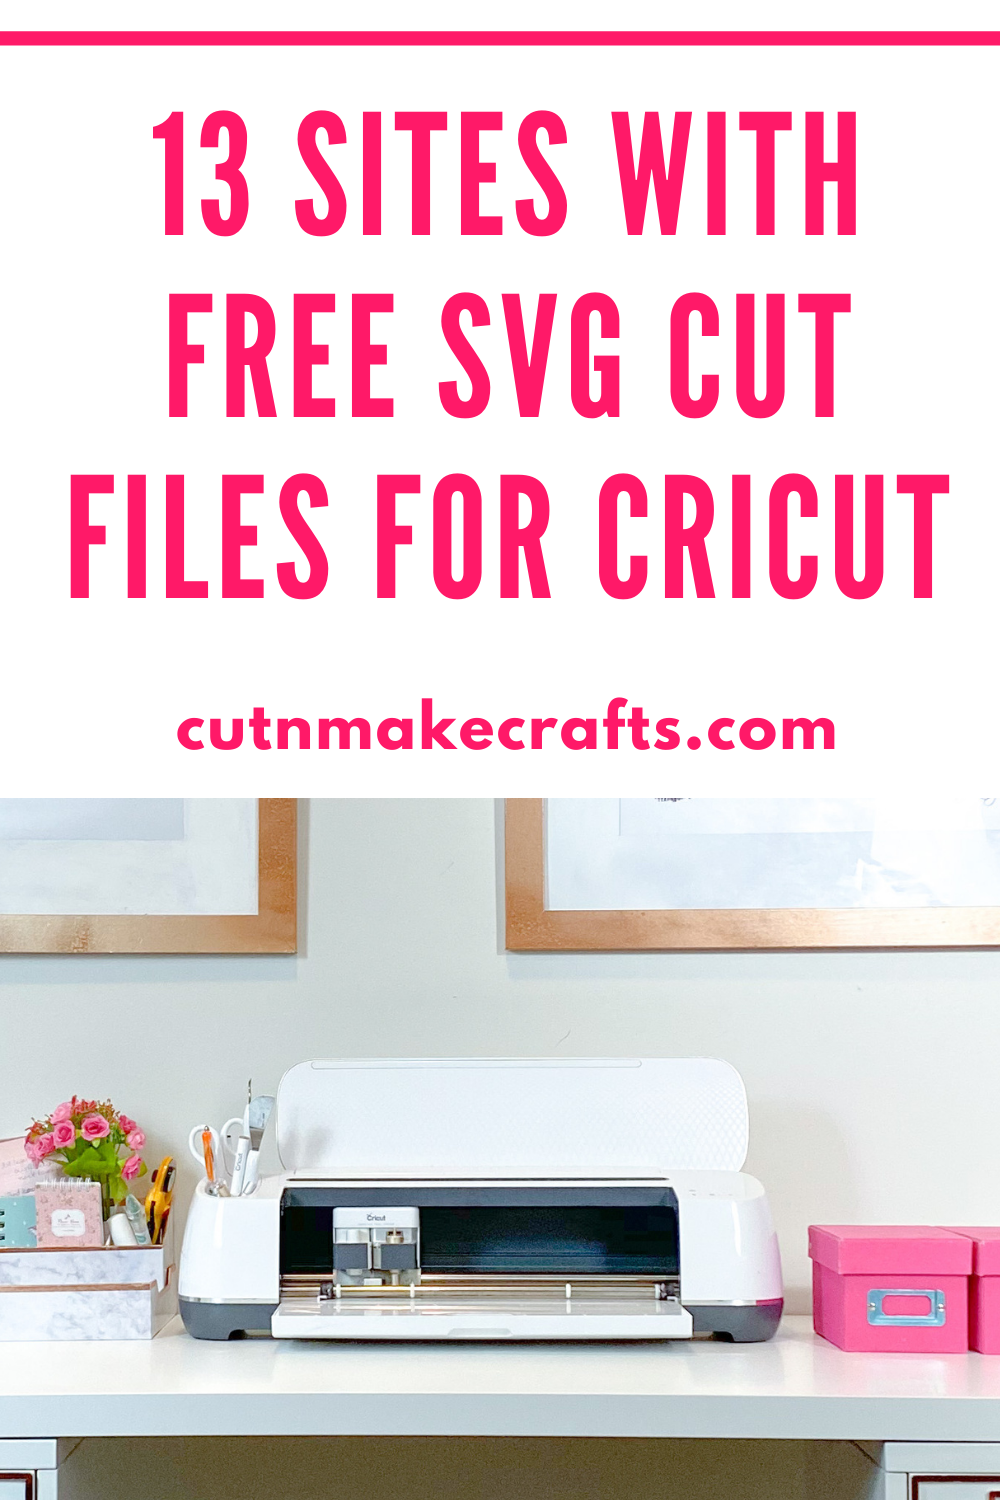 Free Svg Cut Files For Cricut | vlr.eng.br